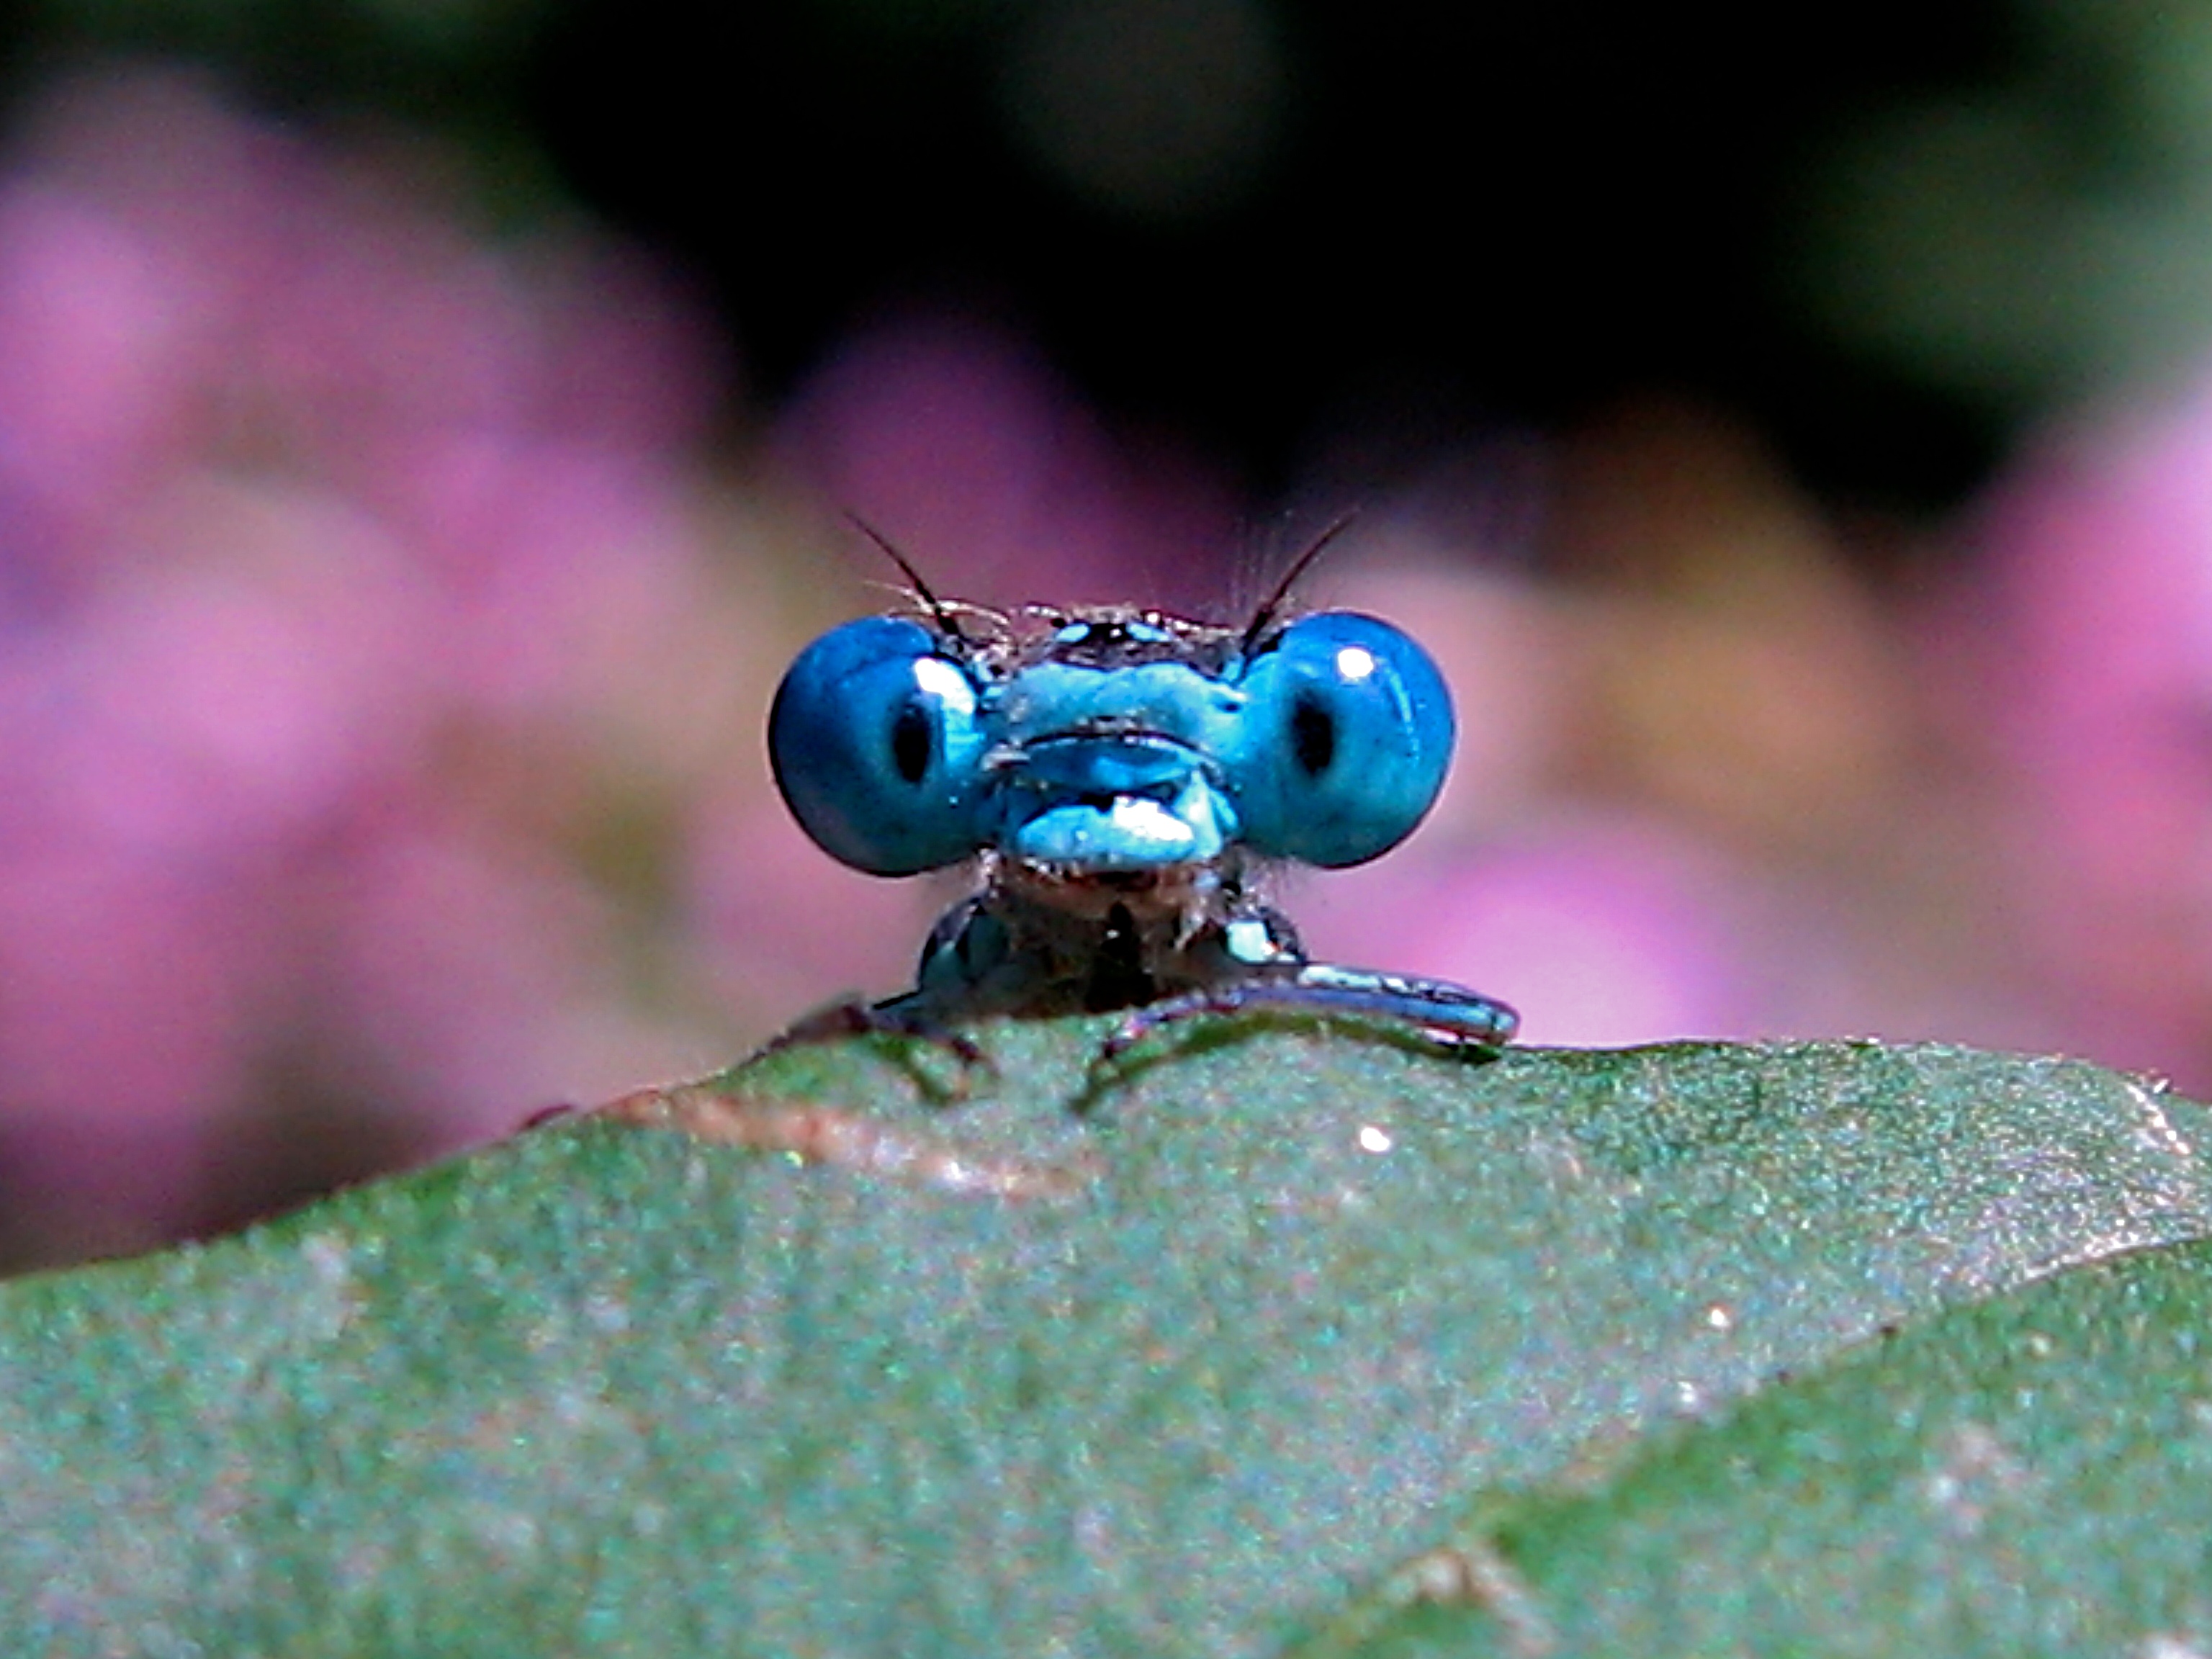 File:Timitalia - dragonfly (by).jpg - Wikimedia Commons